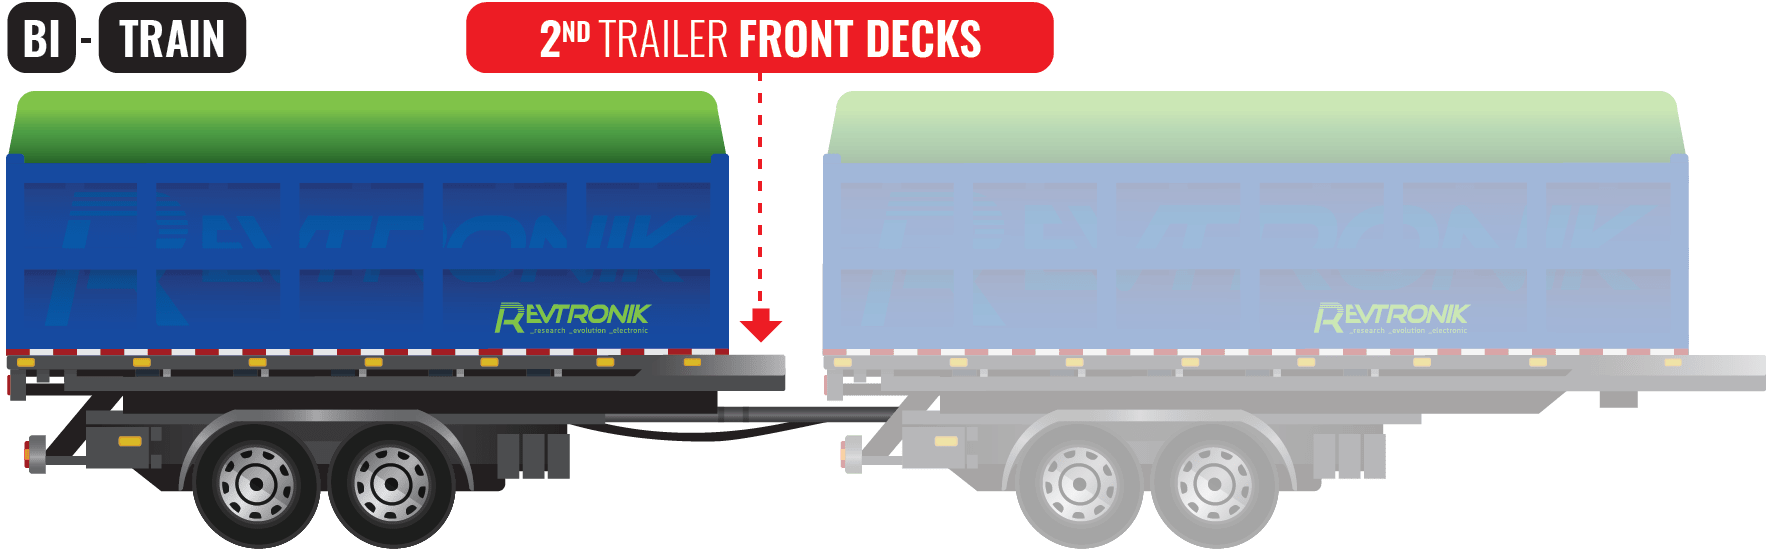 Trucks-illustrations-by-Kikdesign.ca-4